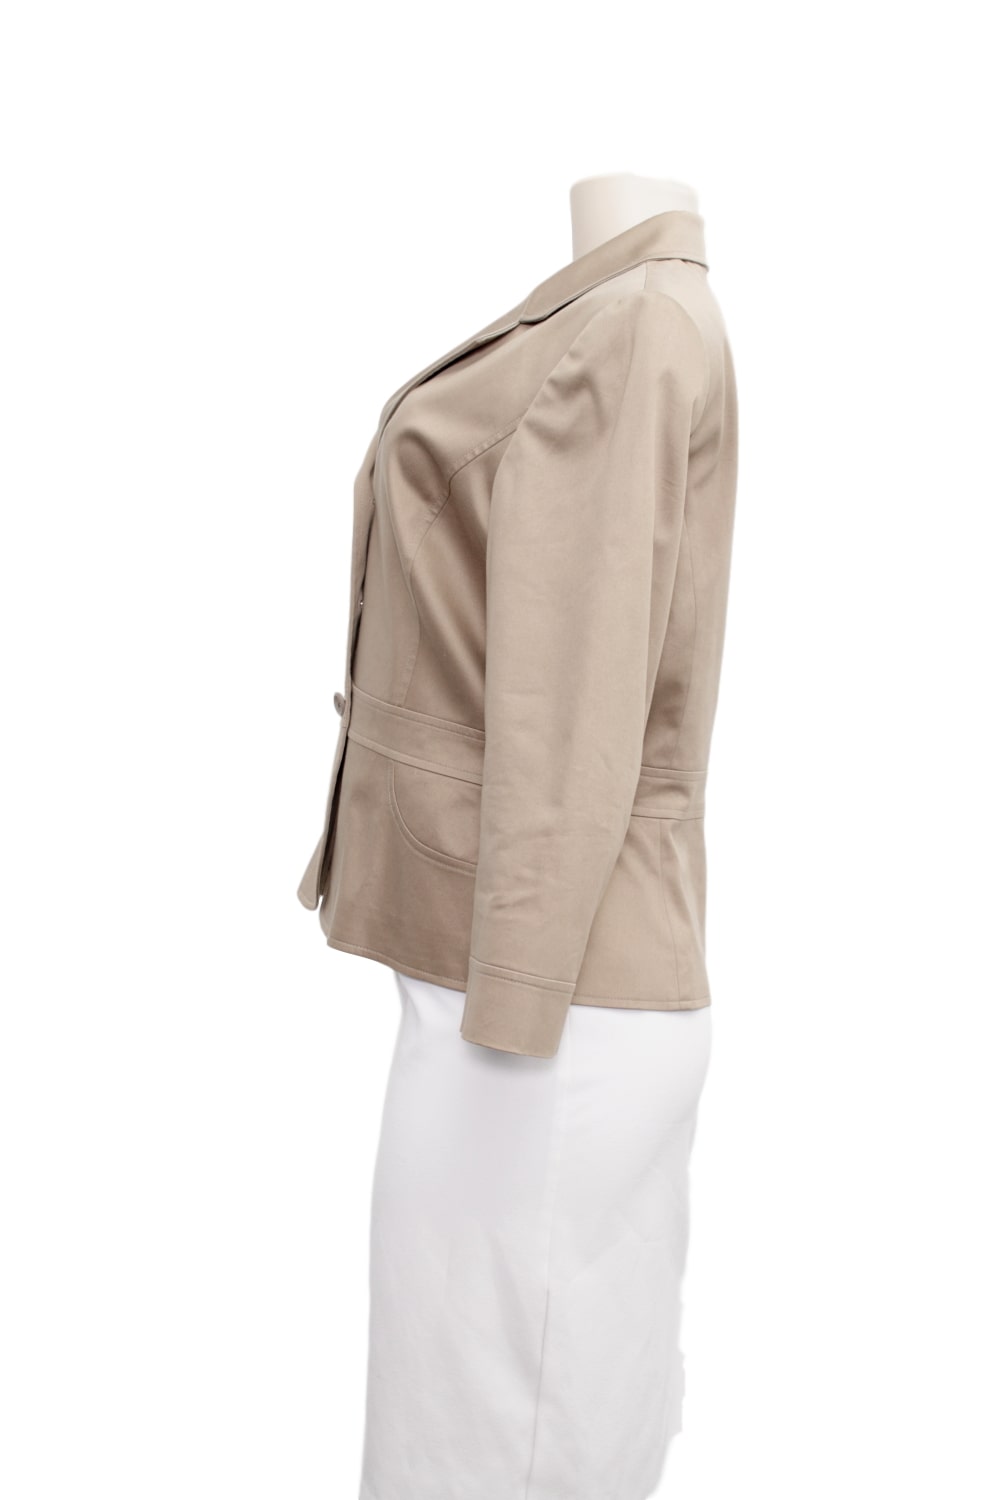 Tahari Lightweight Jacket -Left Side- eKlozet Luxury Consignment